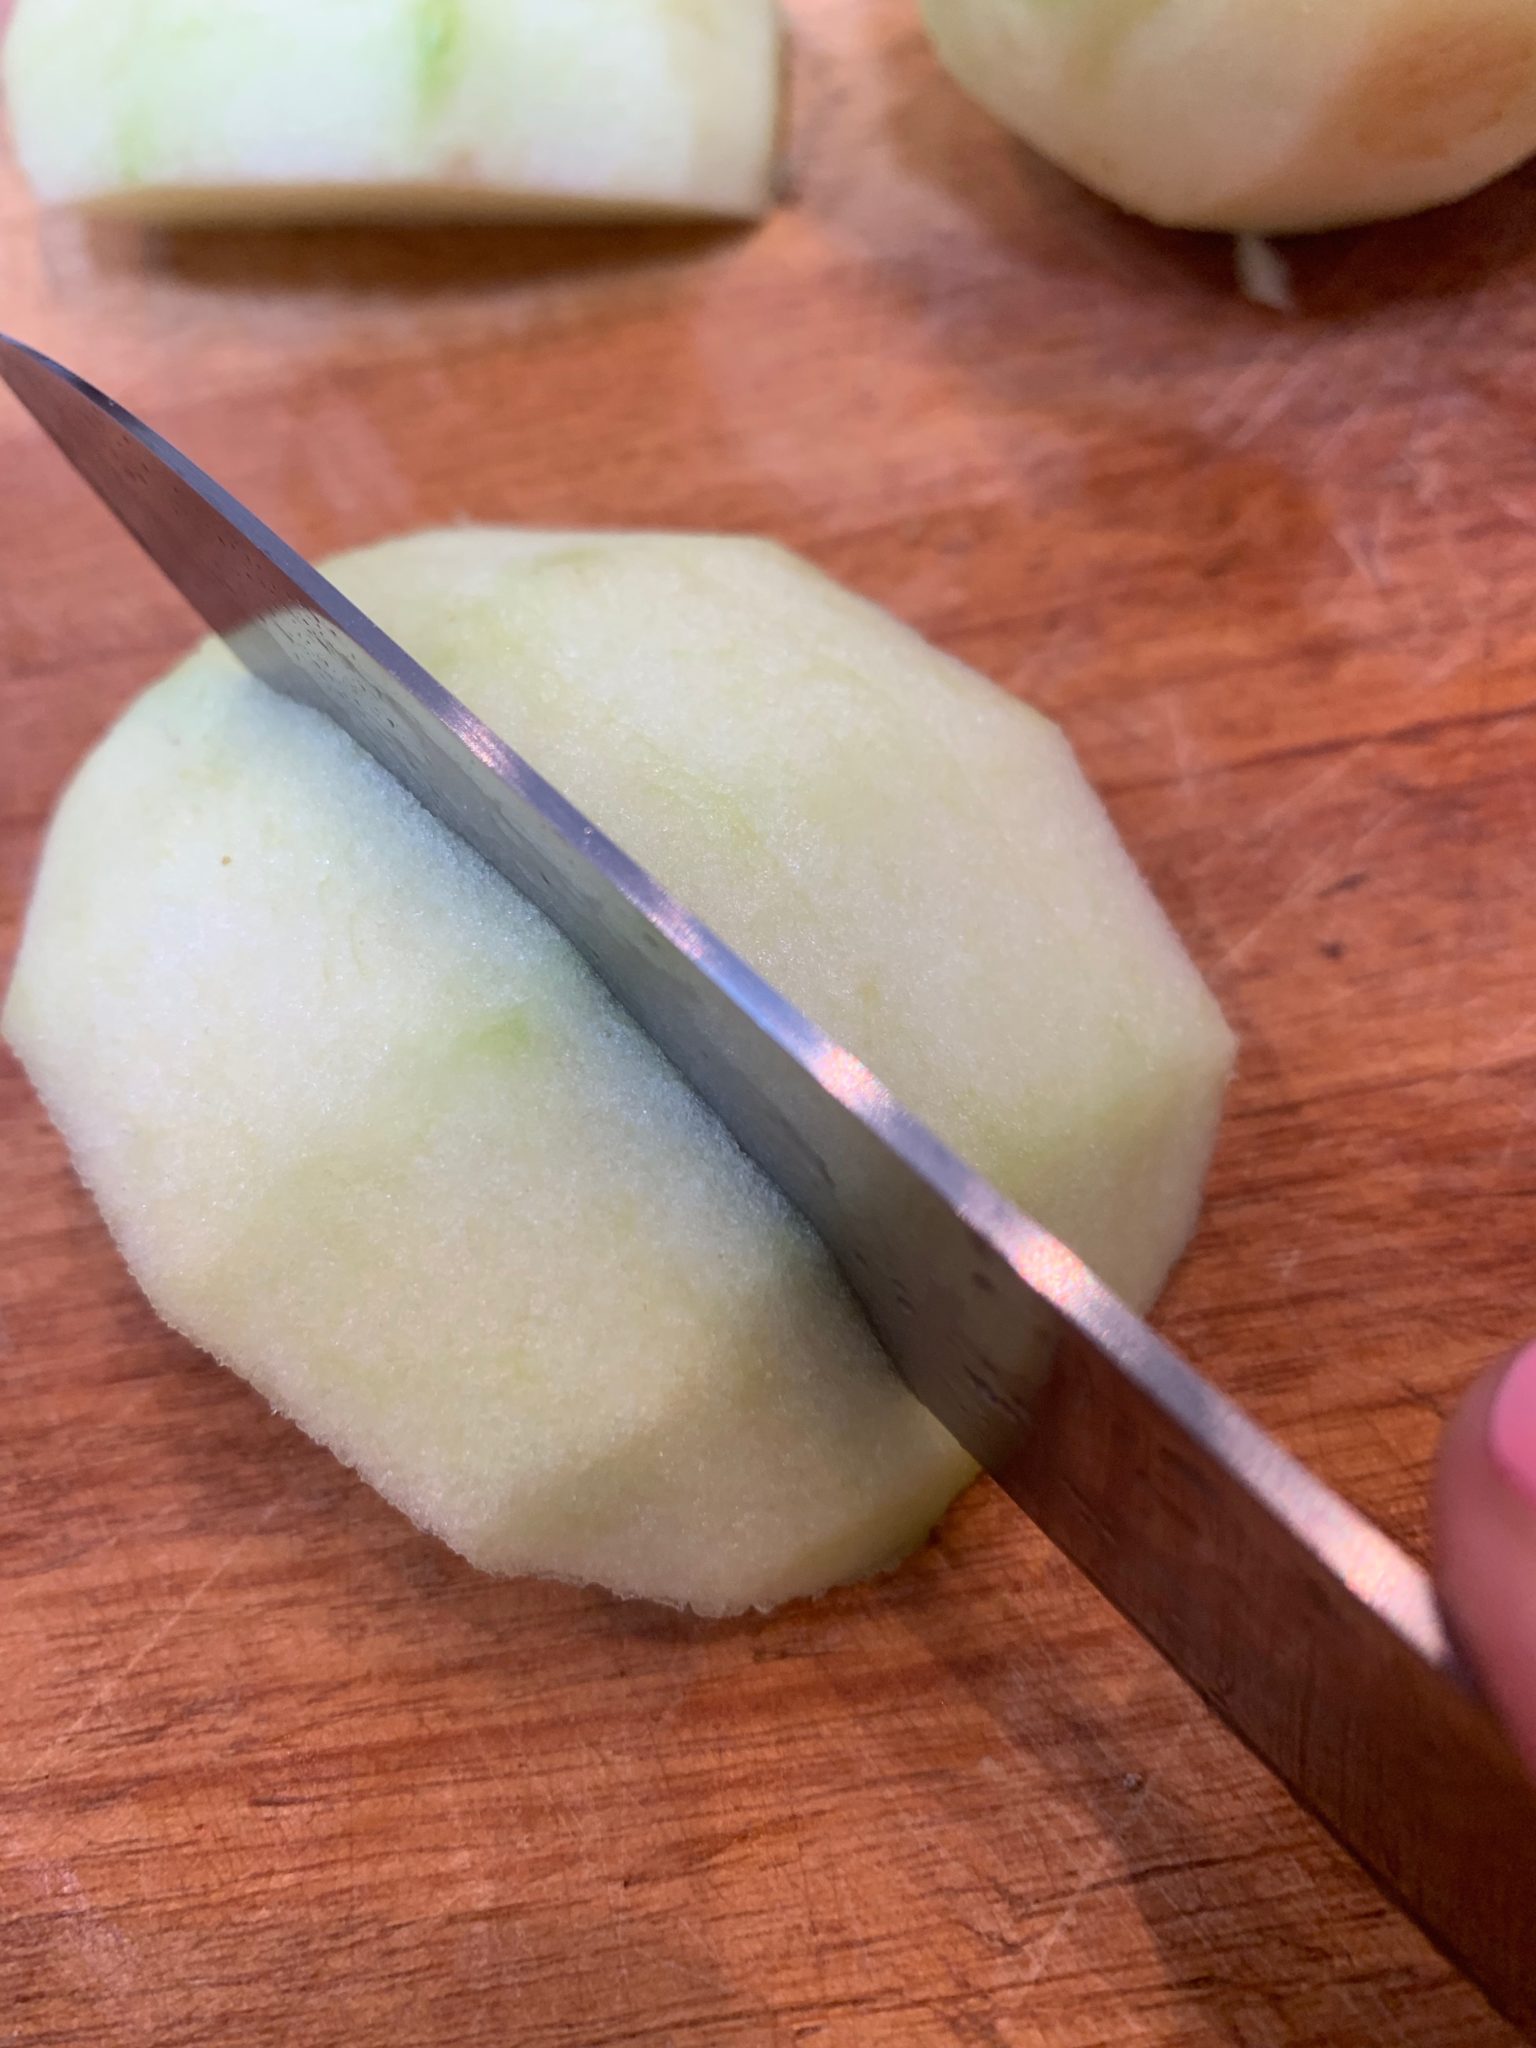 Cutting an apple quarter partway through